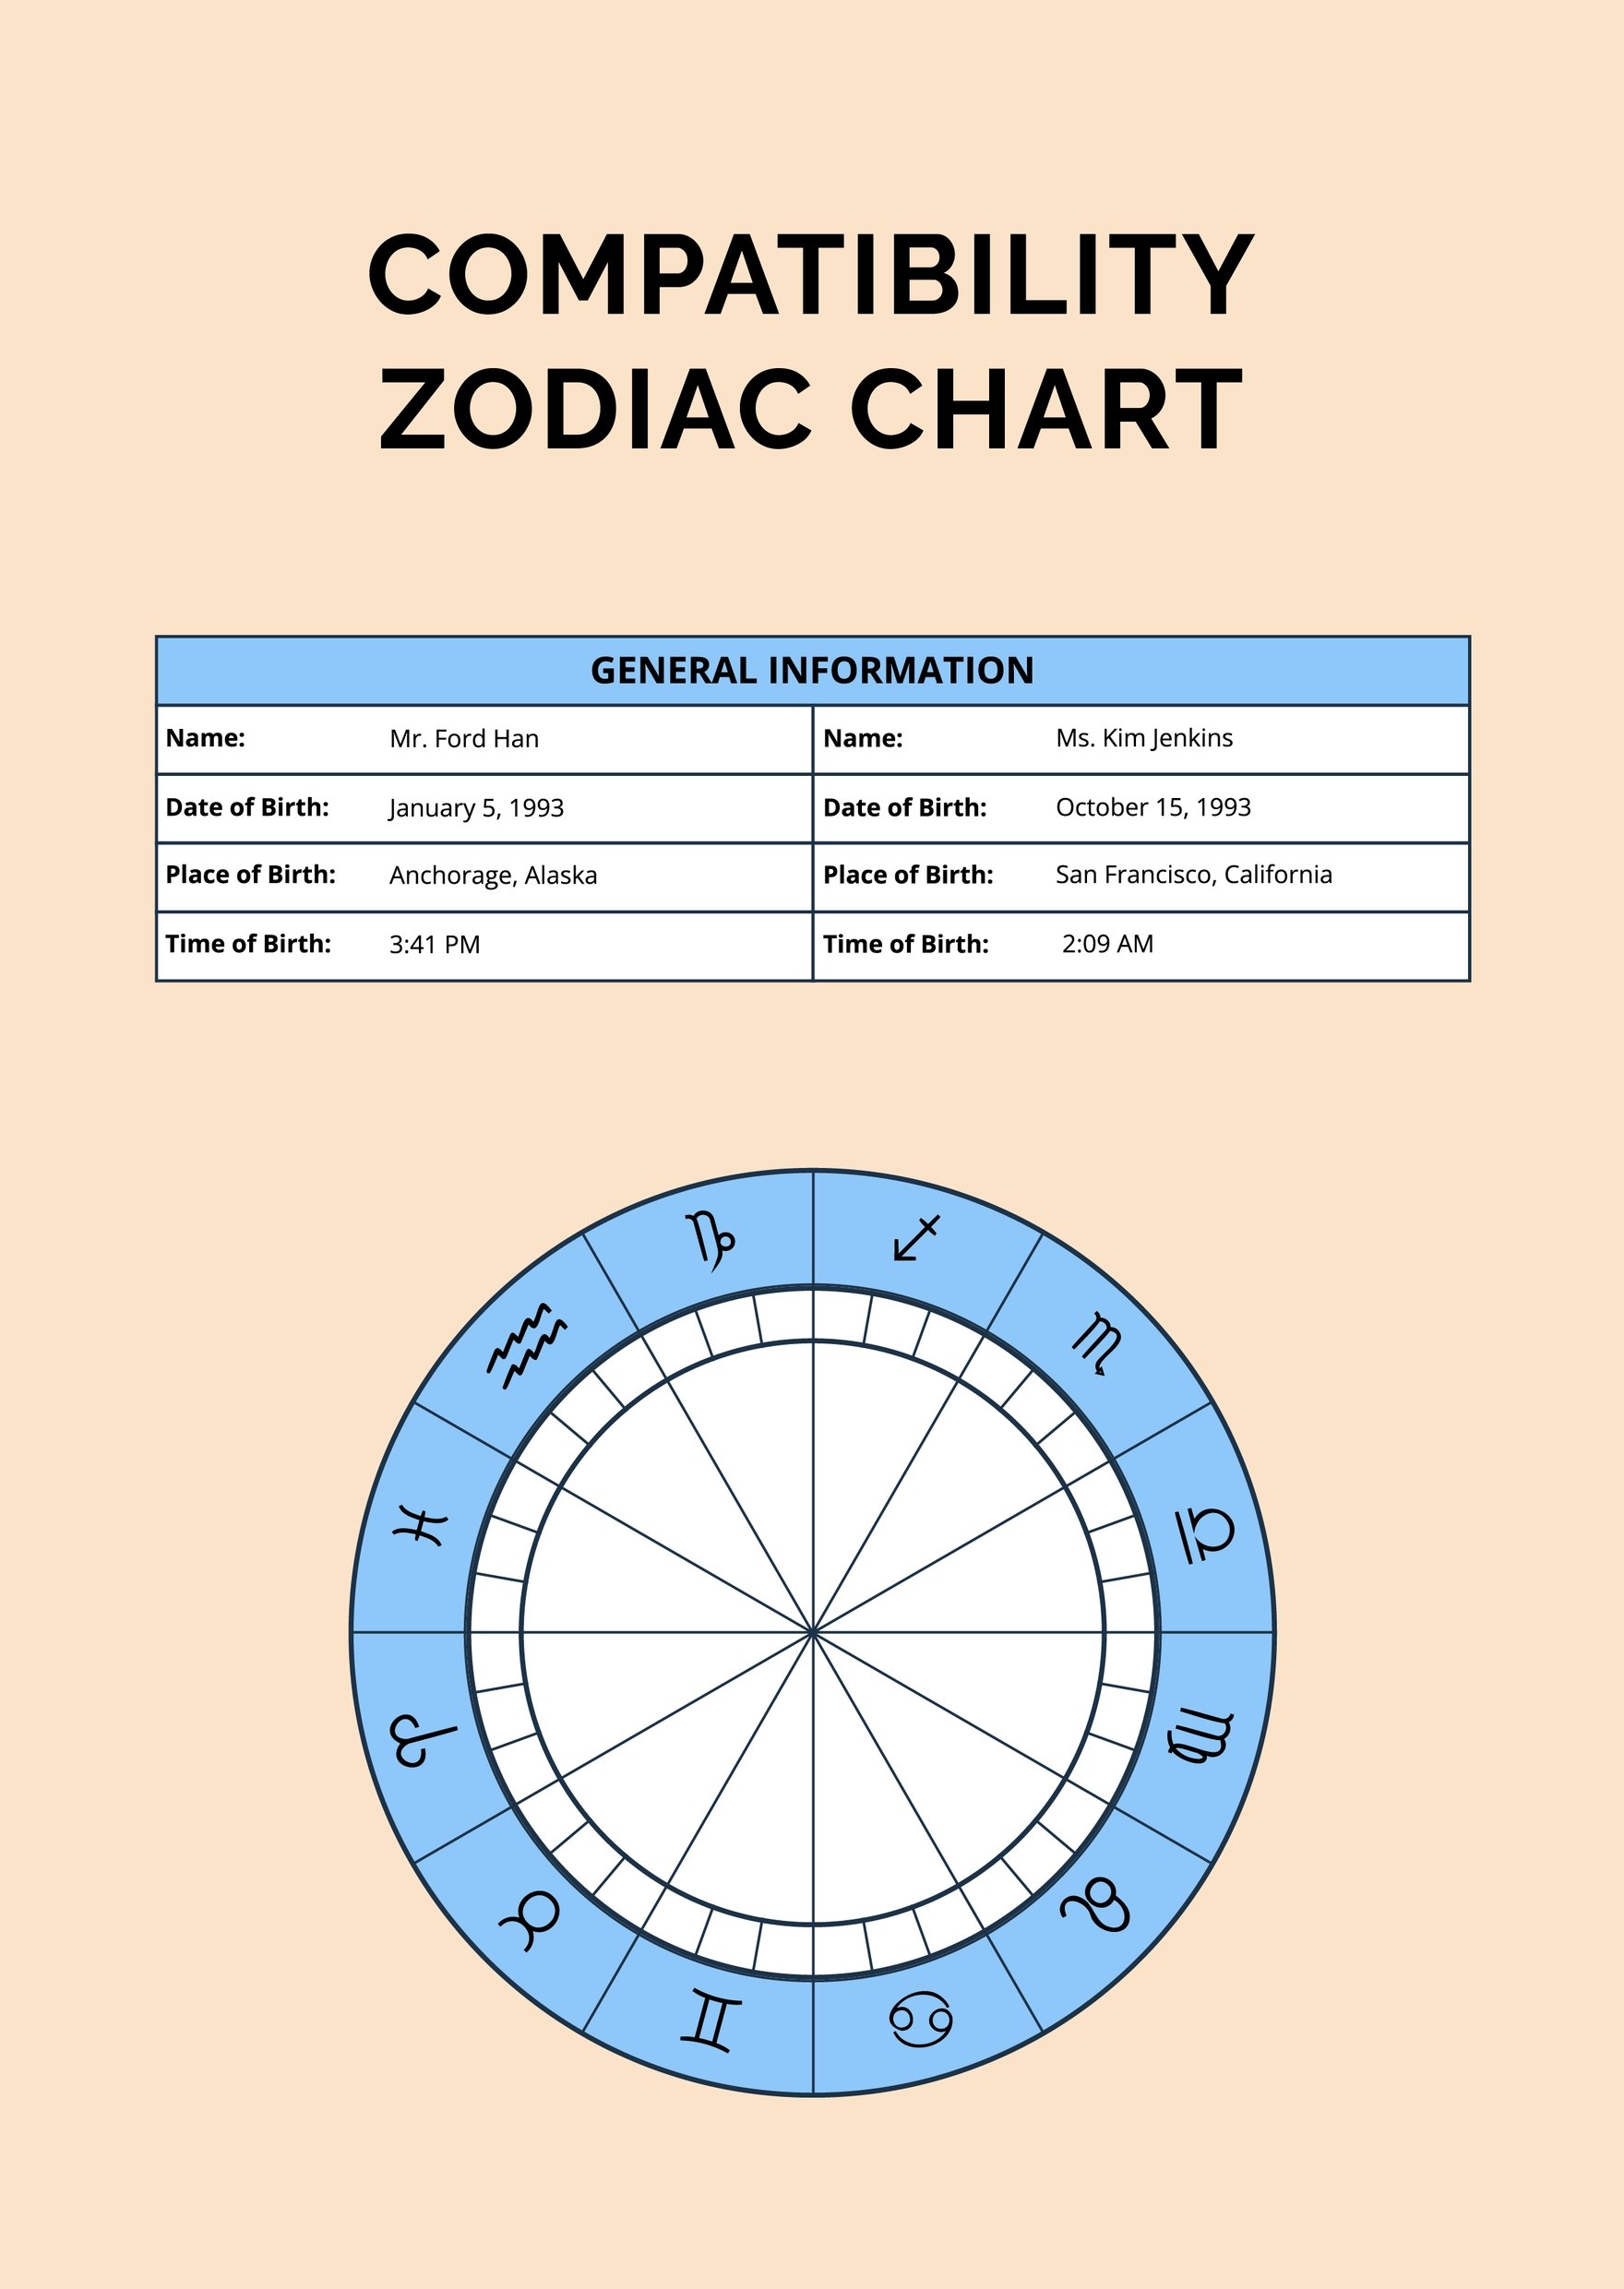 Compatibility Zodiac Chart Template